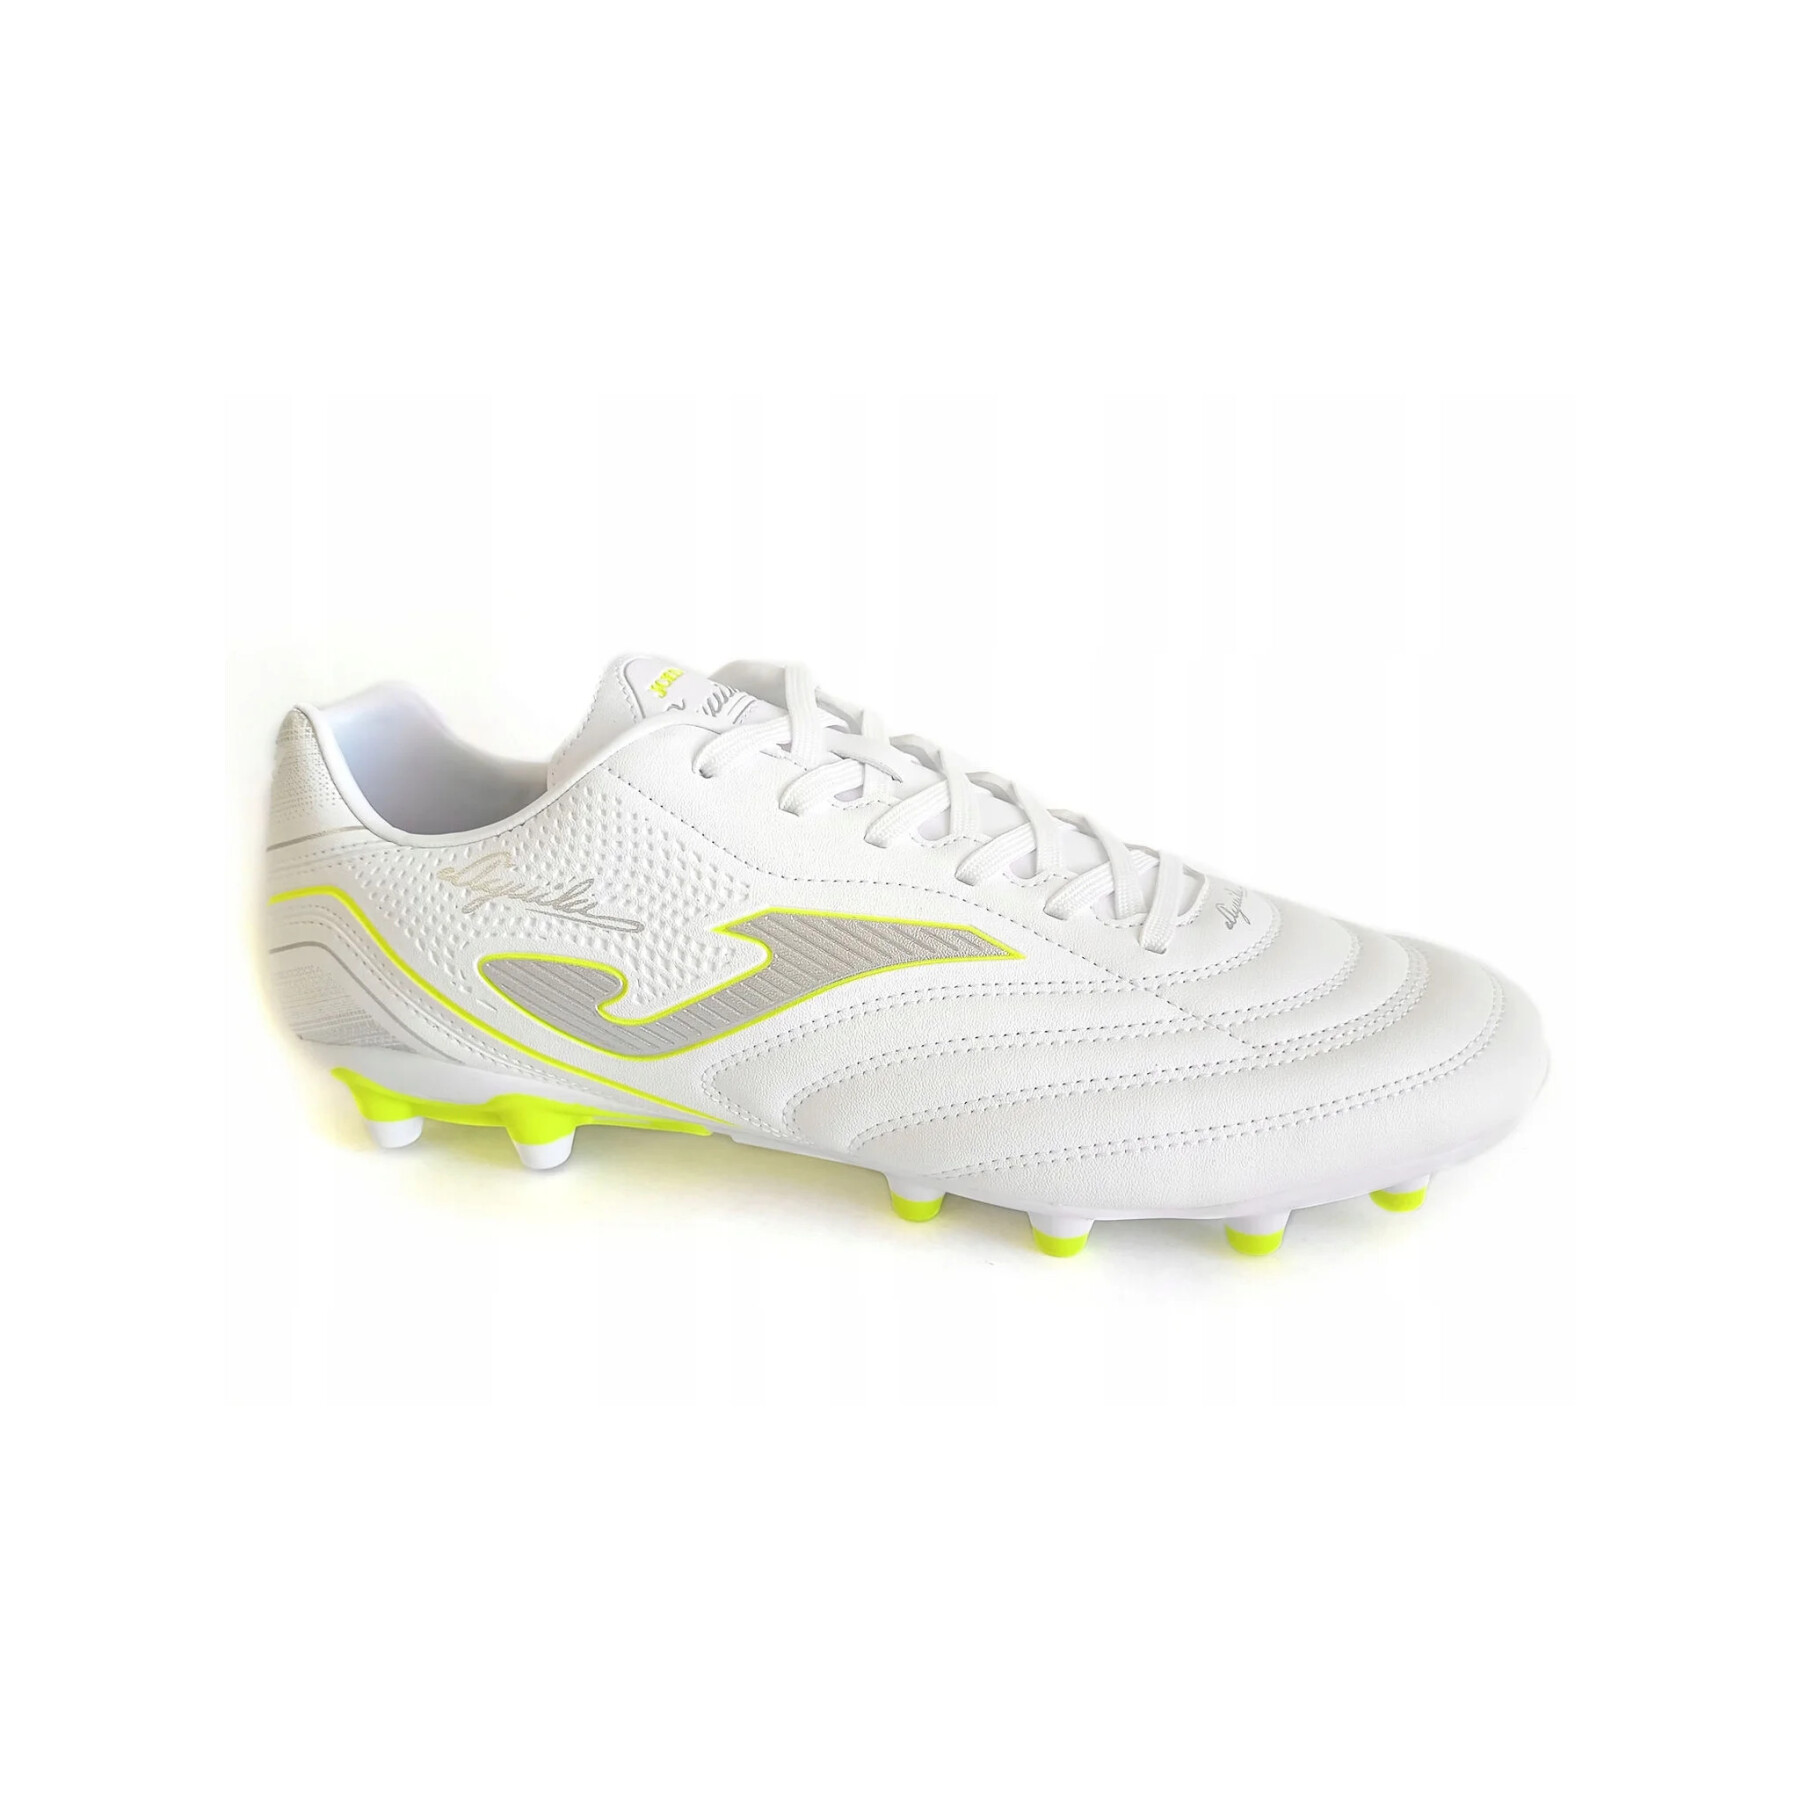 Soccer shoes Joma Aguila 2402 FG